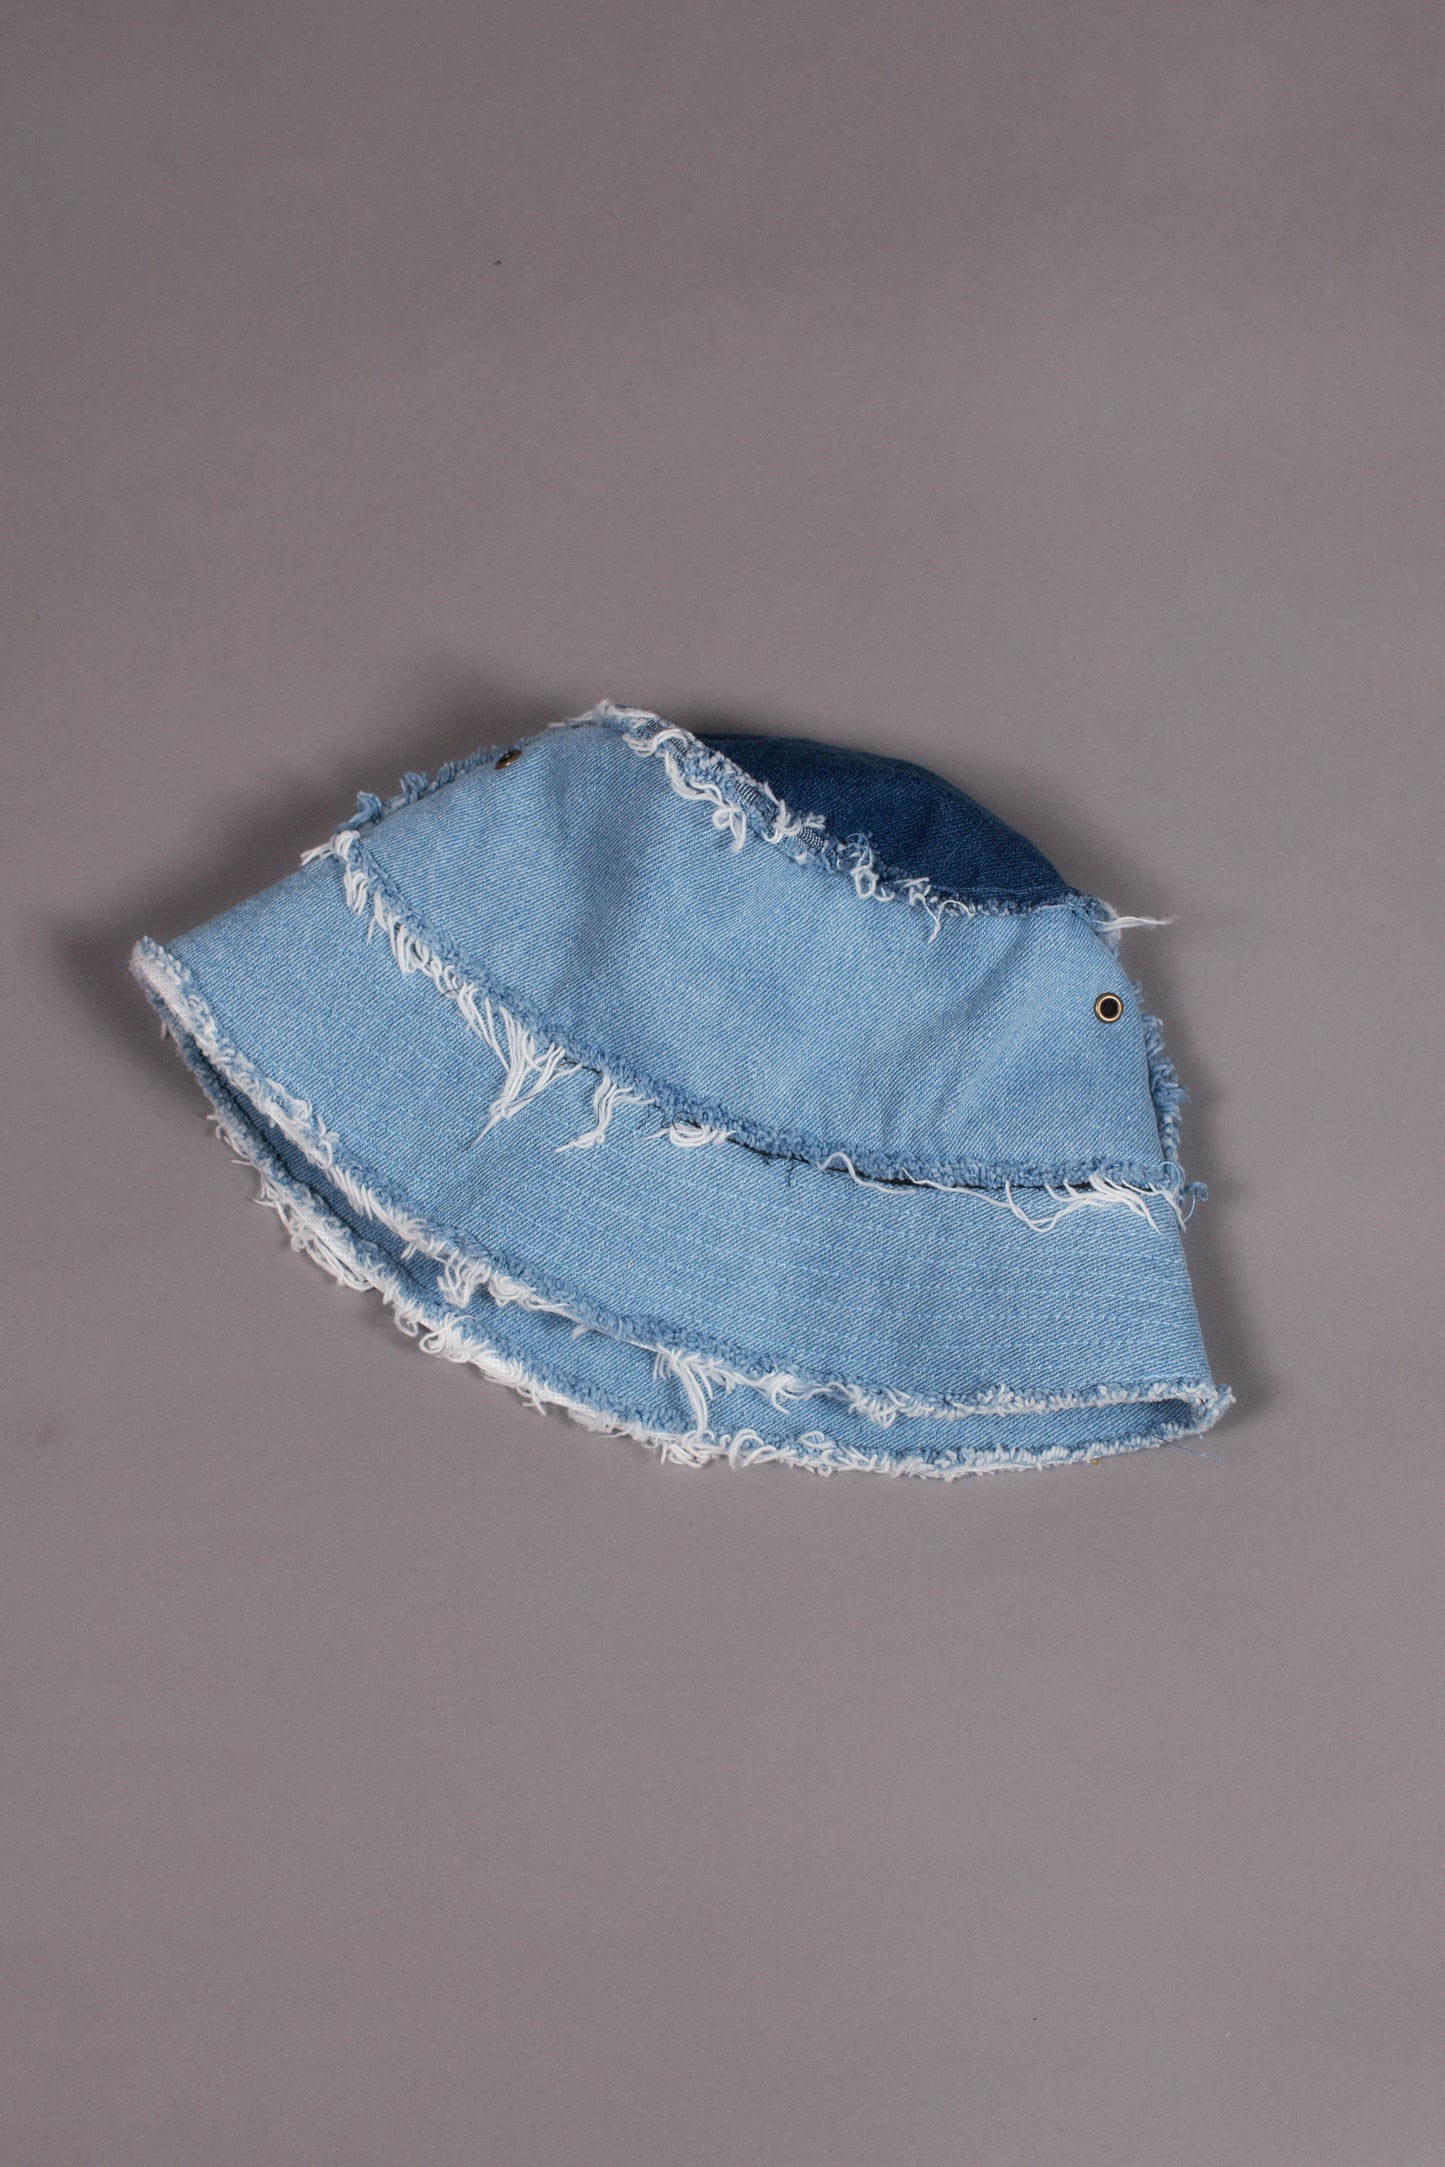 Obsesión Bucket Hat - Vintage Blue